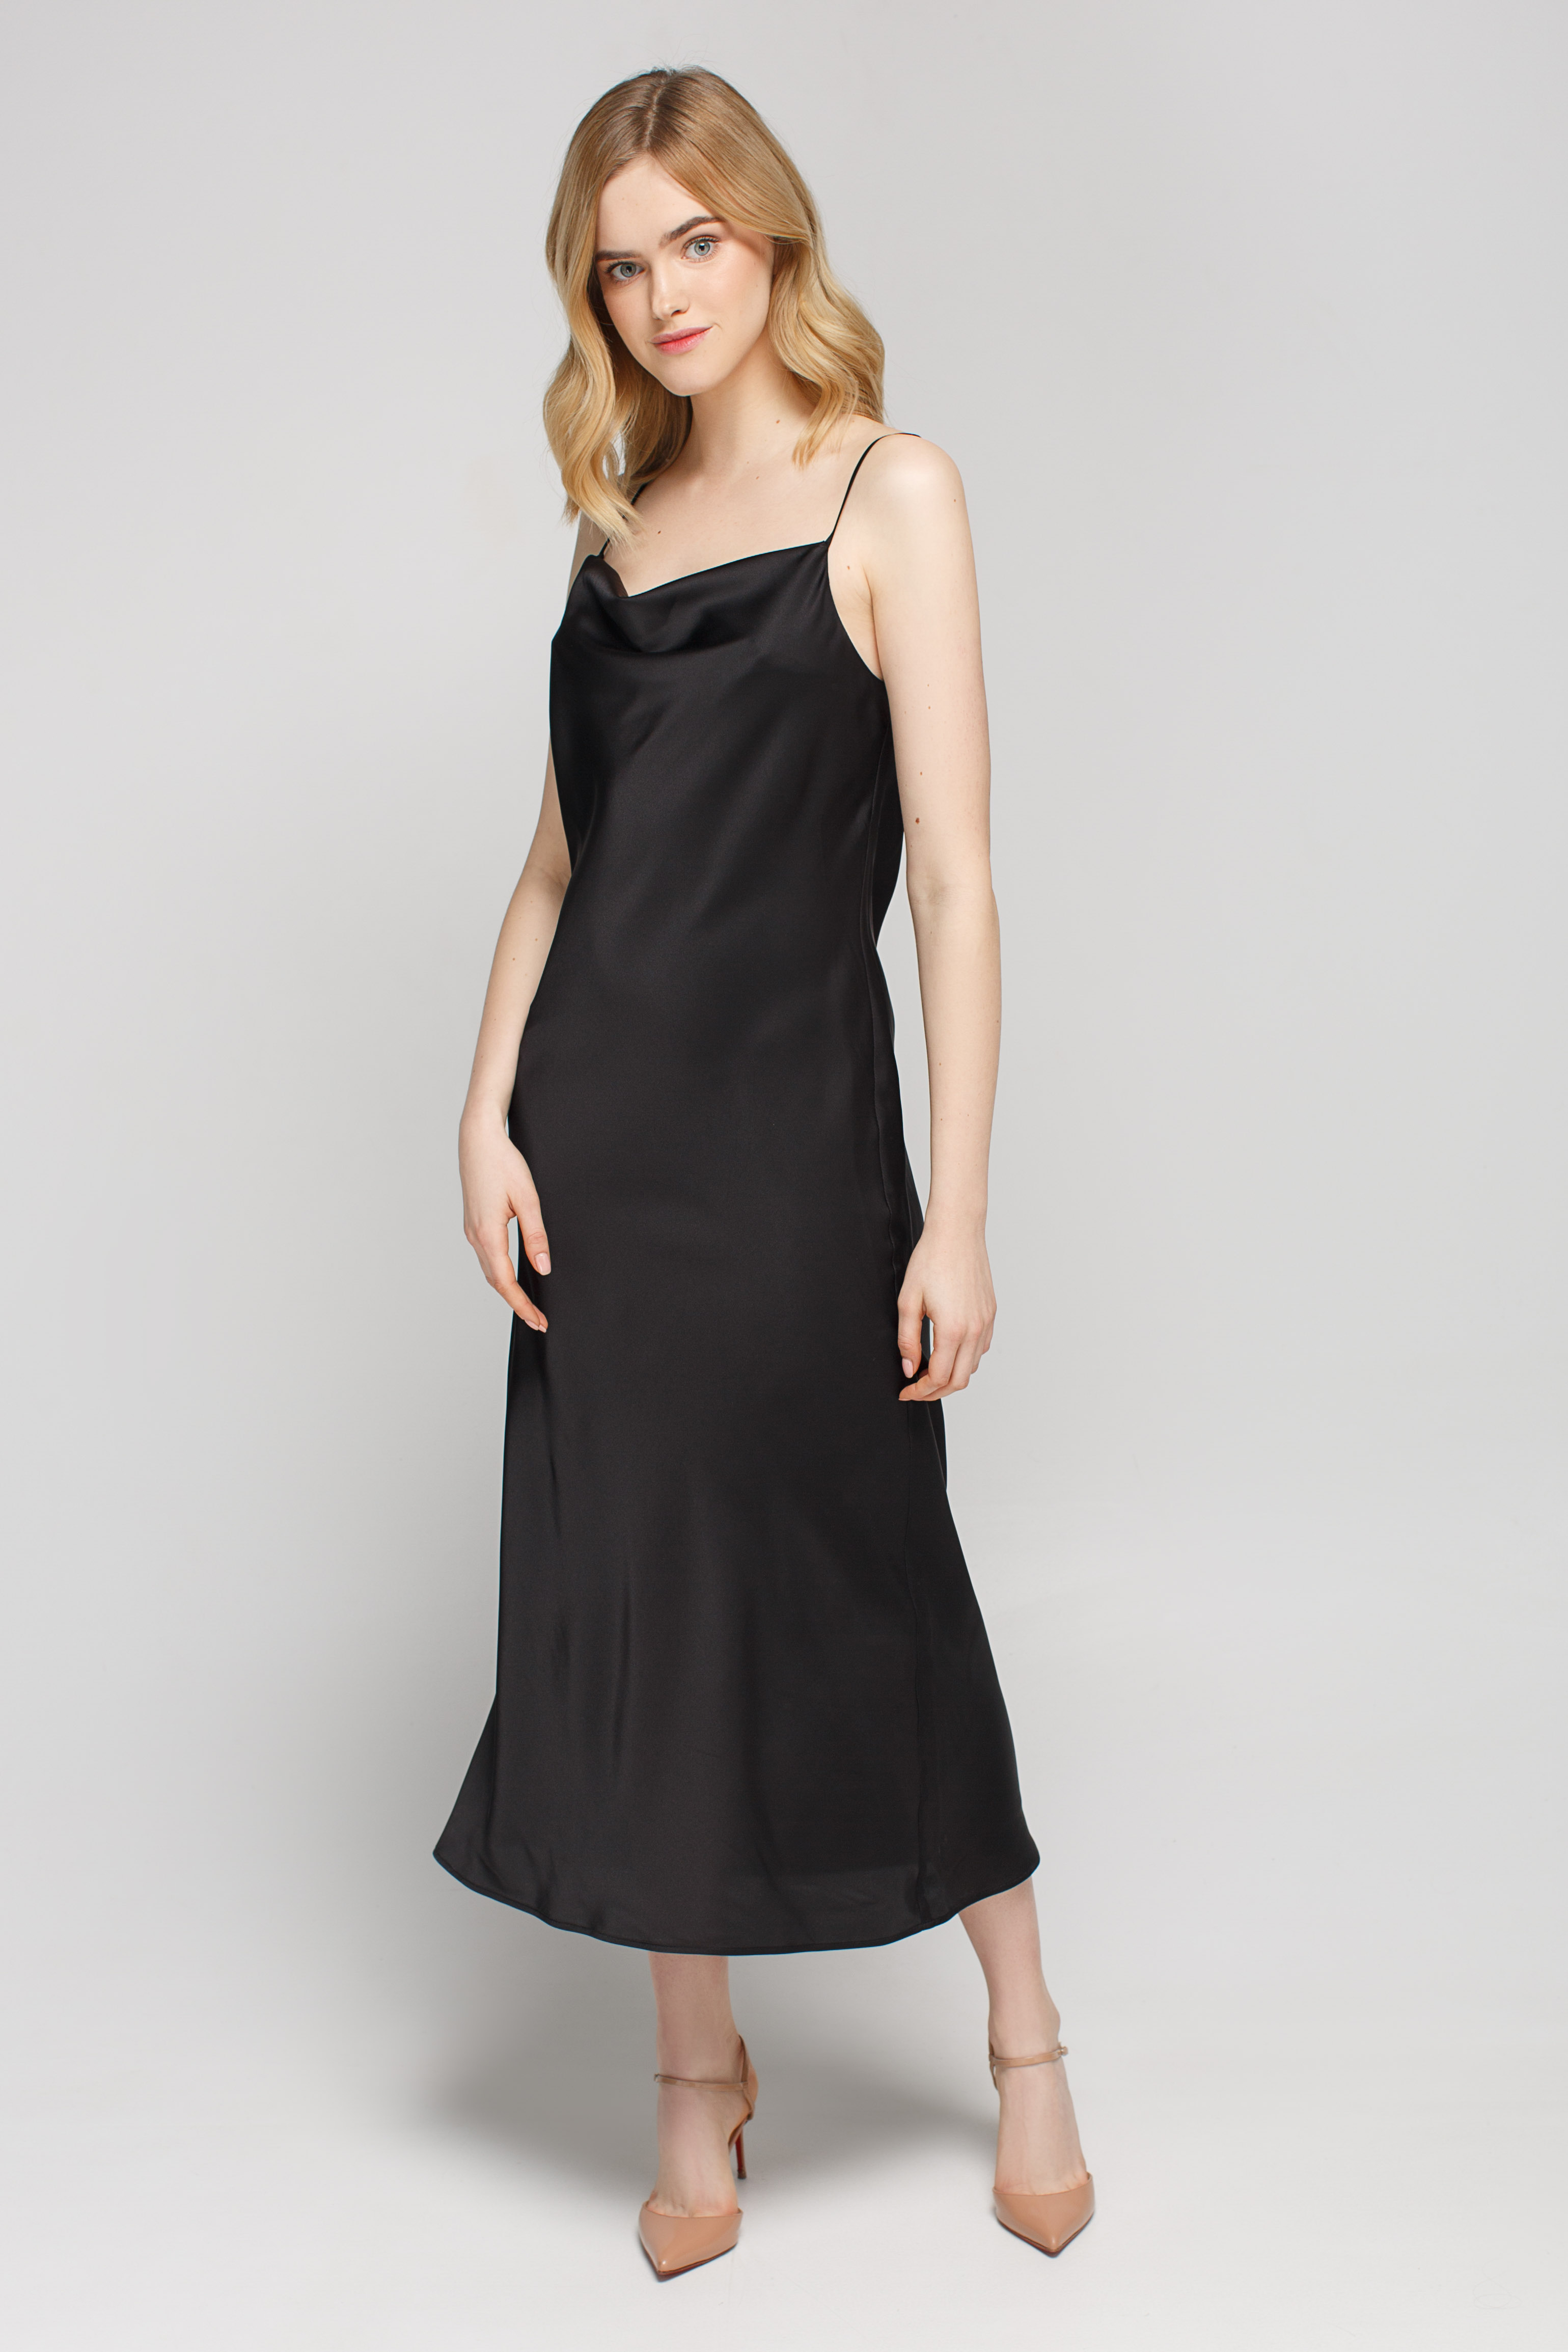 Black slip dress with draped neckline, photo 1